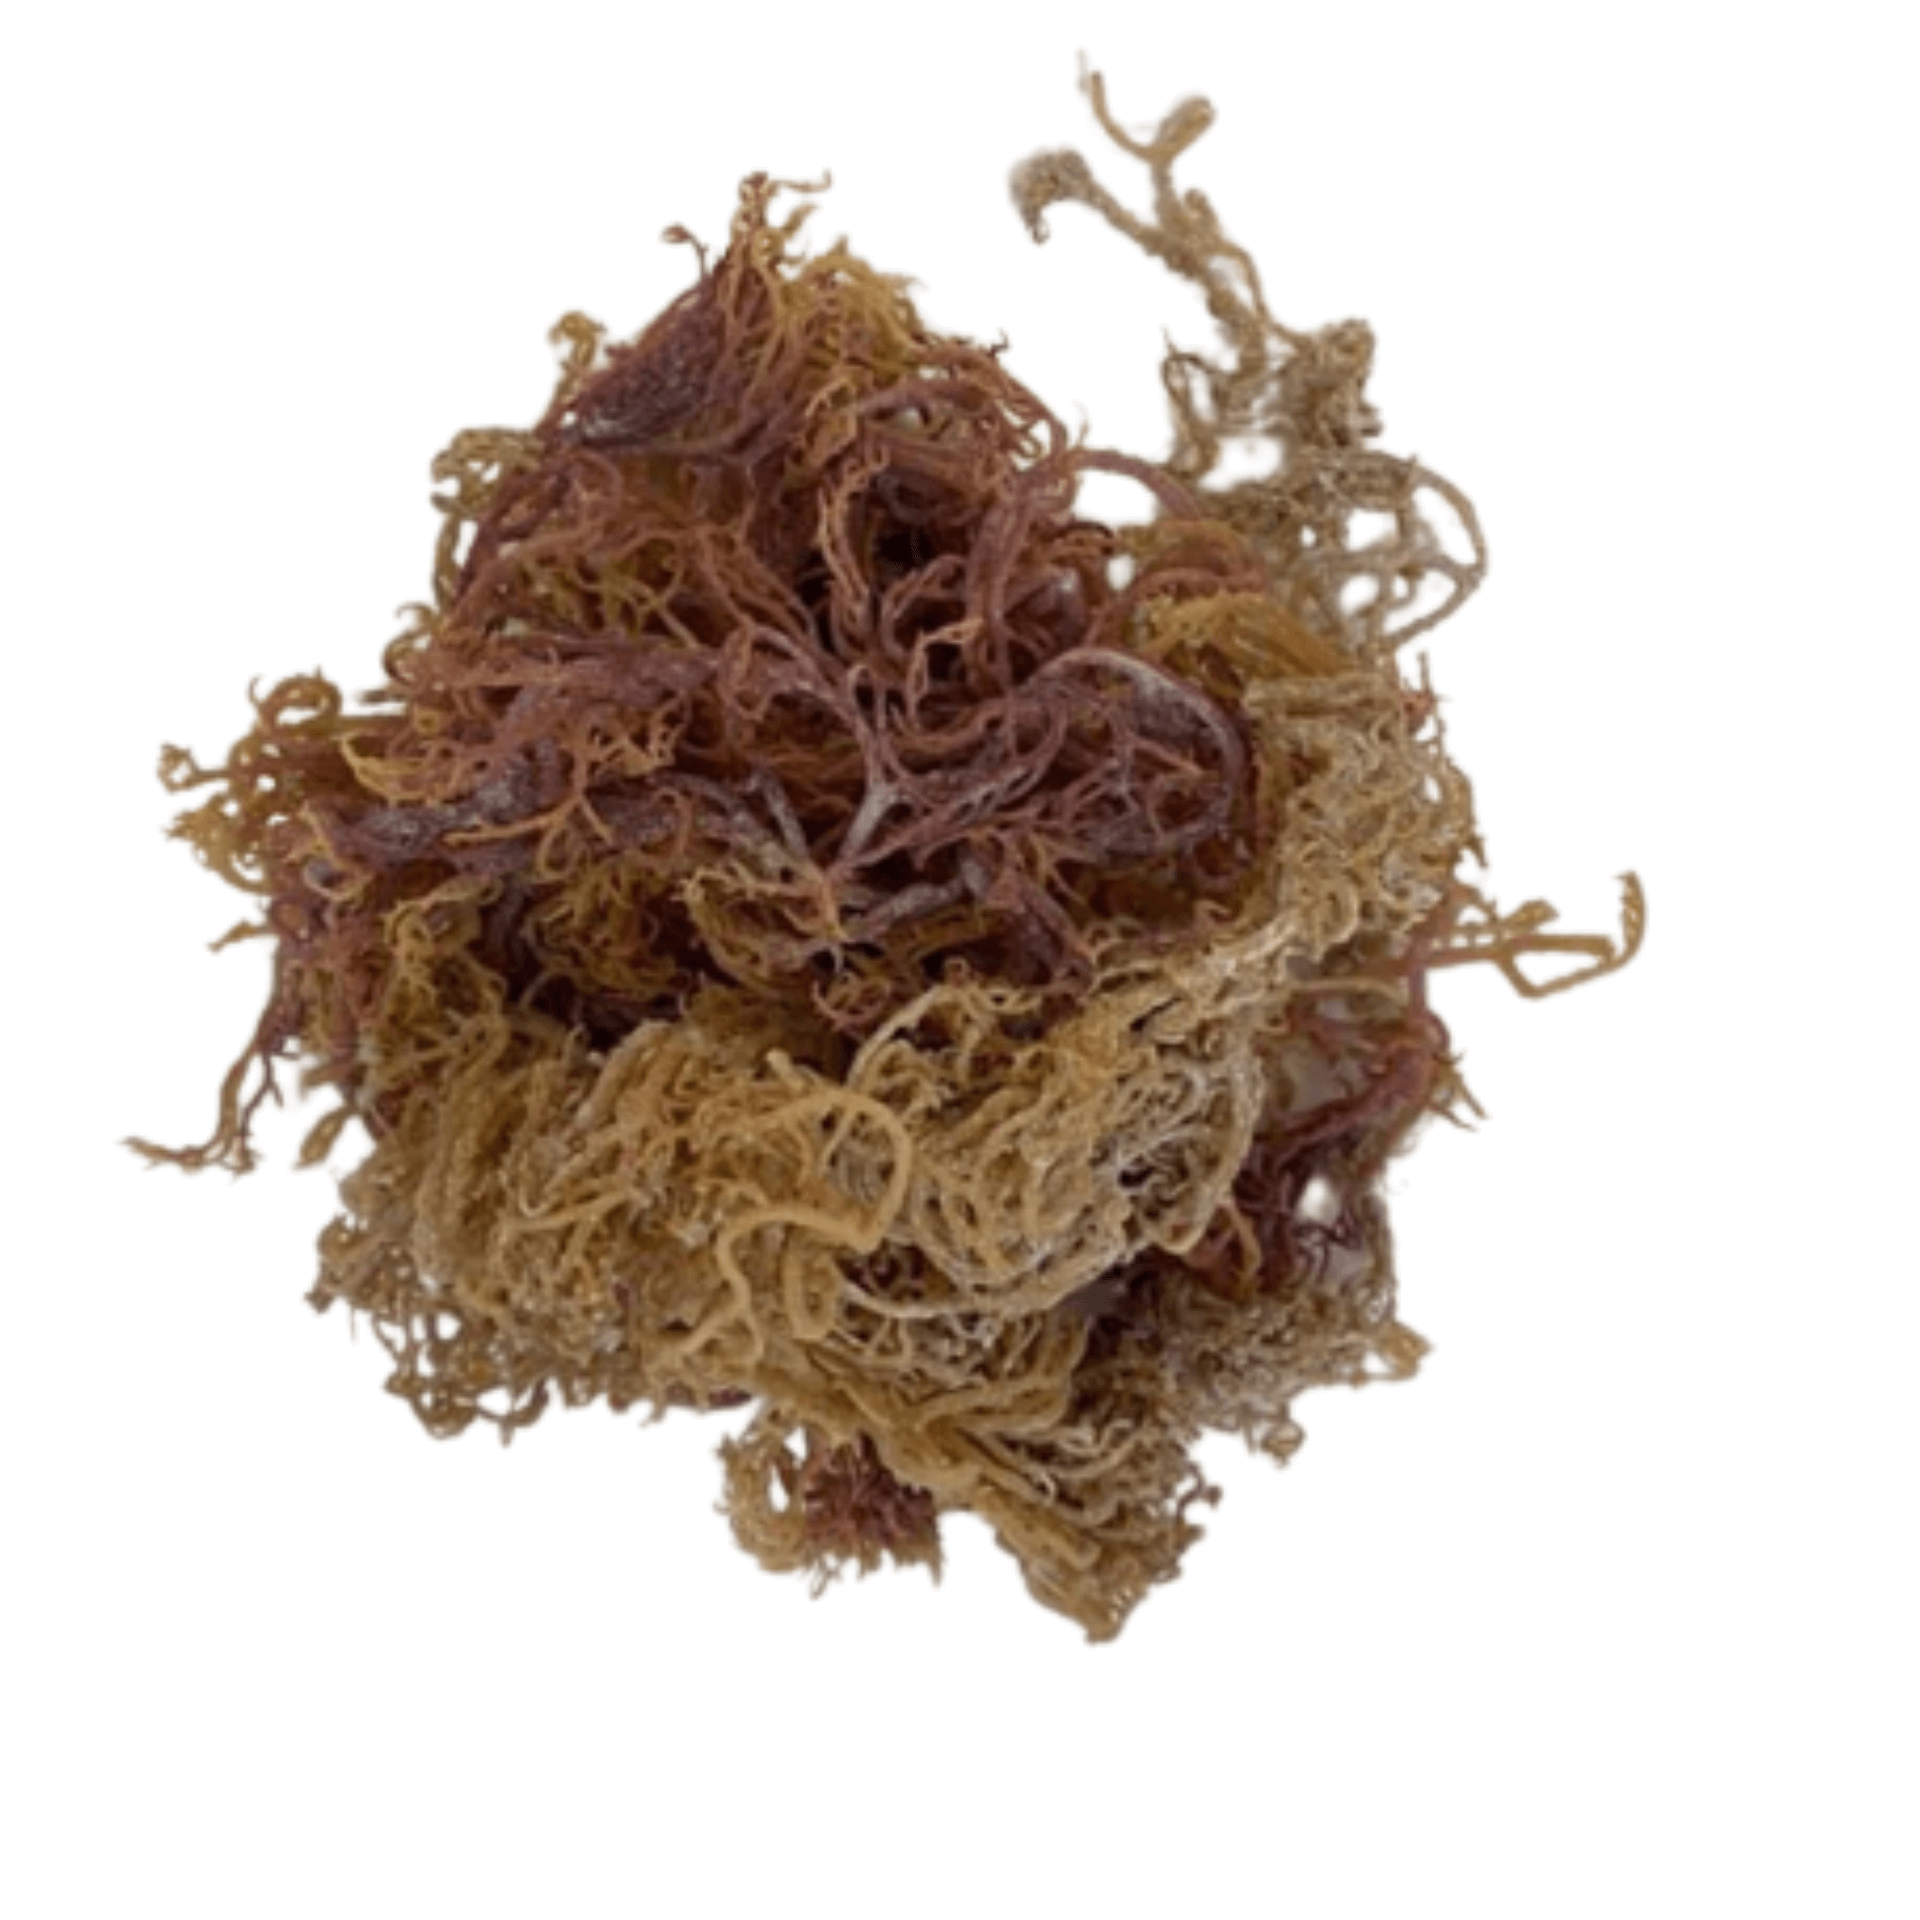 Dried Sea Moss - Asili Sea Moss